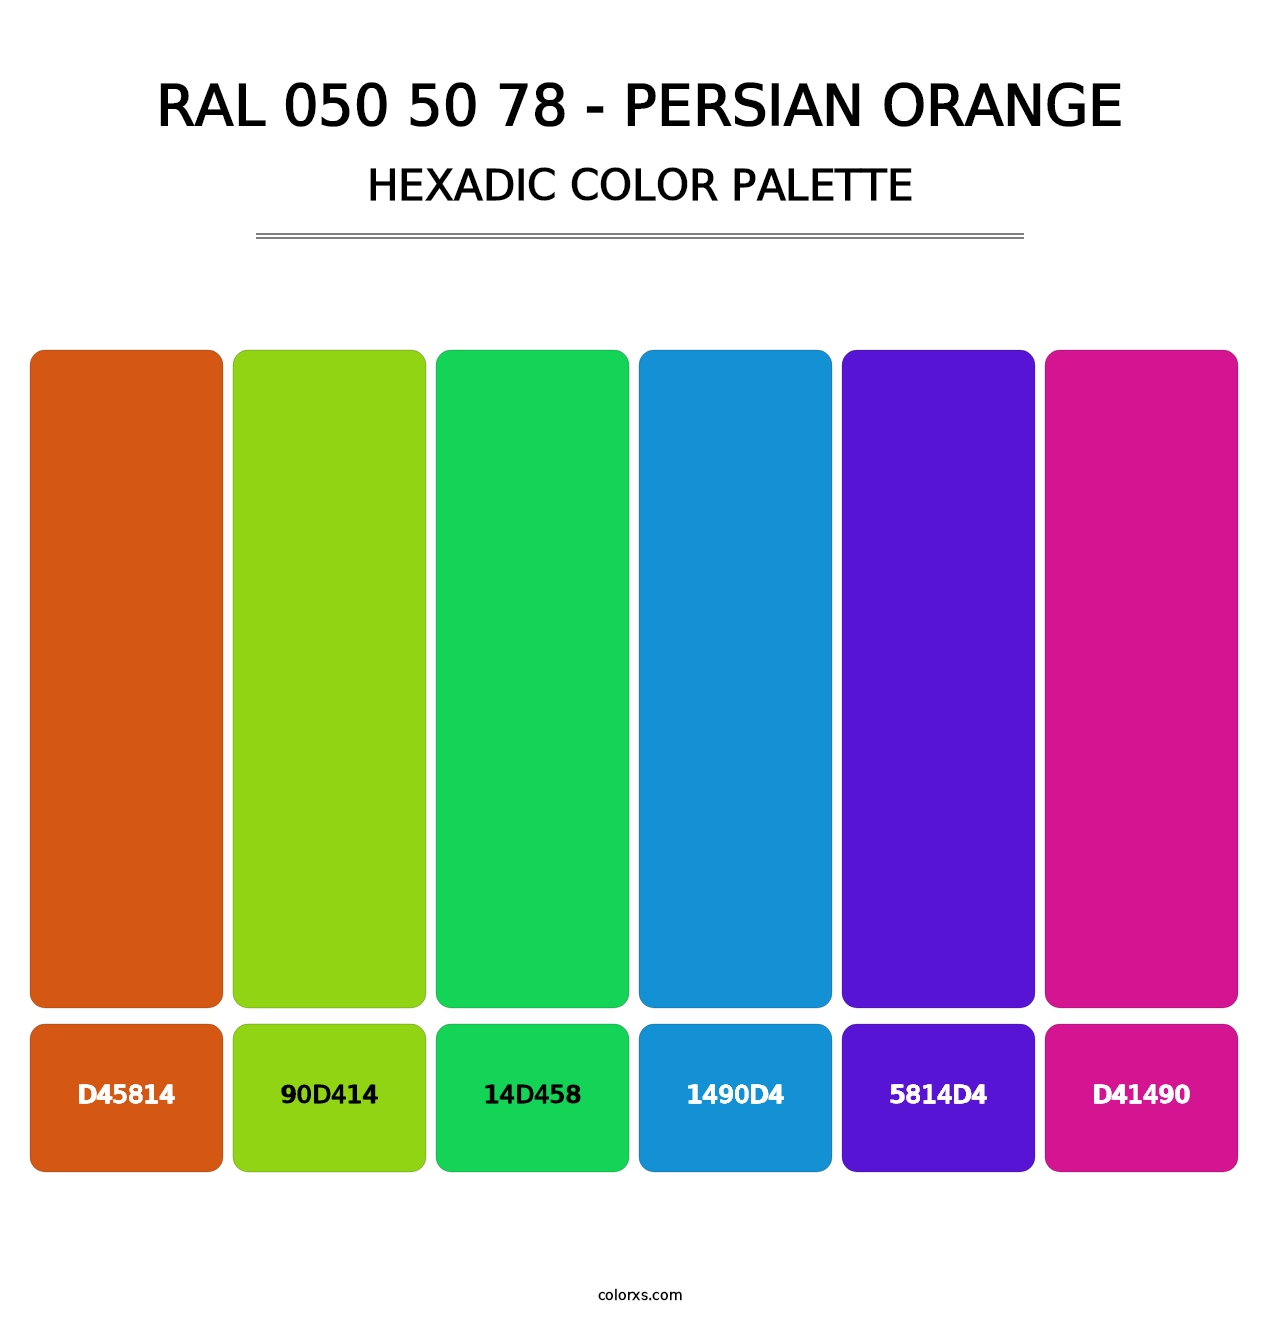 RAL 050 50 78 - Persian Orange - Hexadic Color Palette